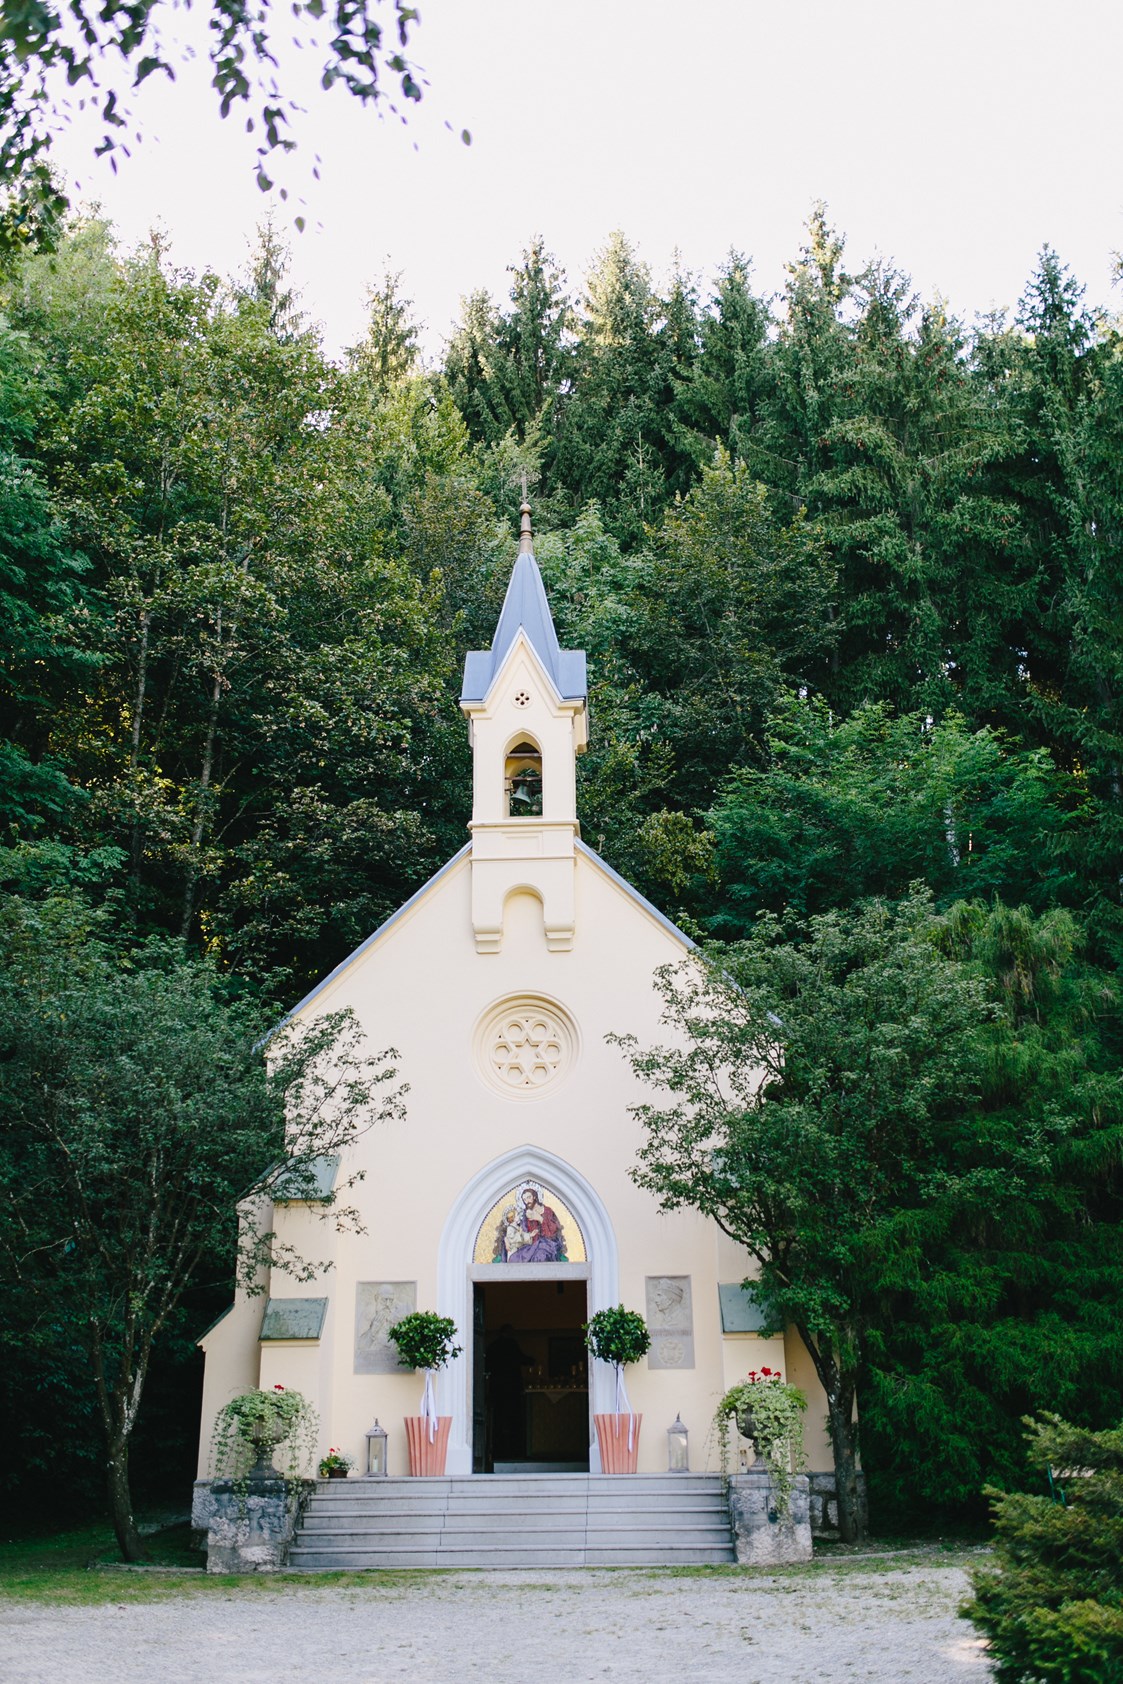 Hochzeitslocation: Hauskapelle im Kurpark Warmbad
Foto  © Carmen and Ingo Photography - Hotel Warmbaderhof *****